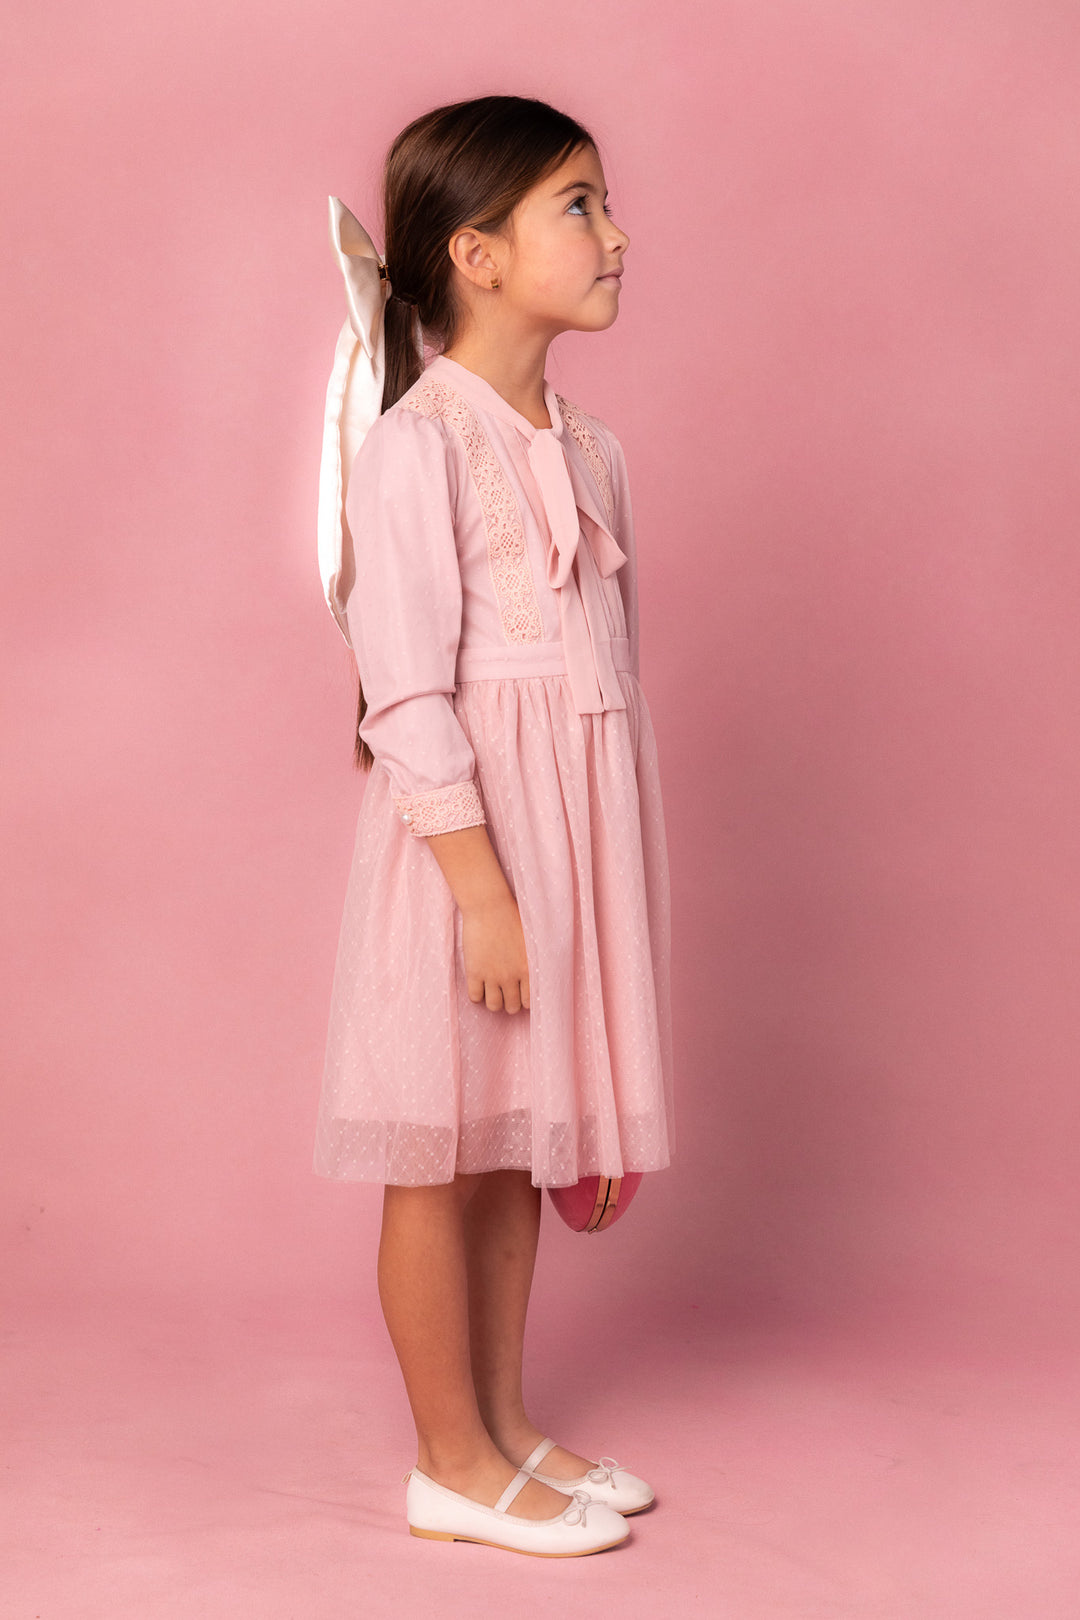 Mini Kate Dress in Pink - FINAL SALE